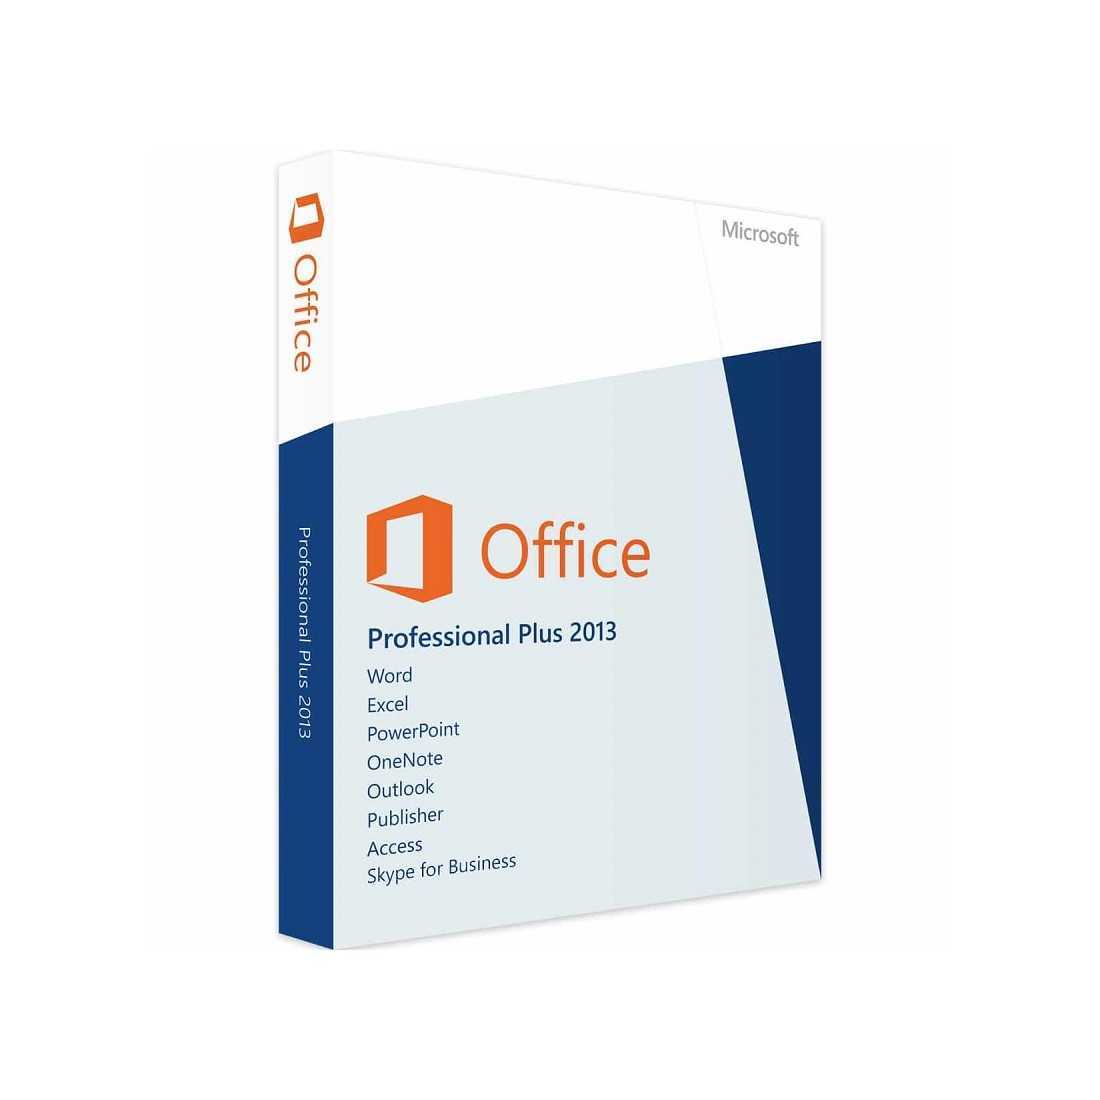 Windows 8.1 Pro + Office 2013